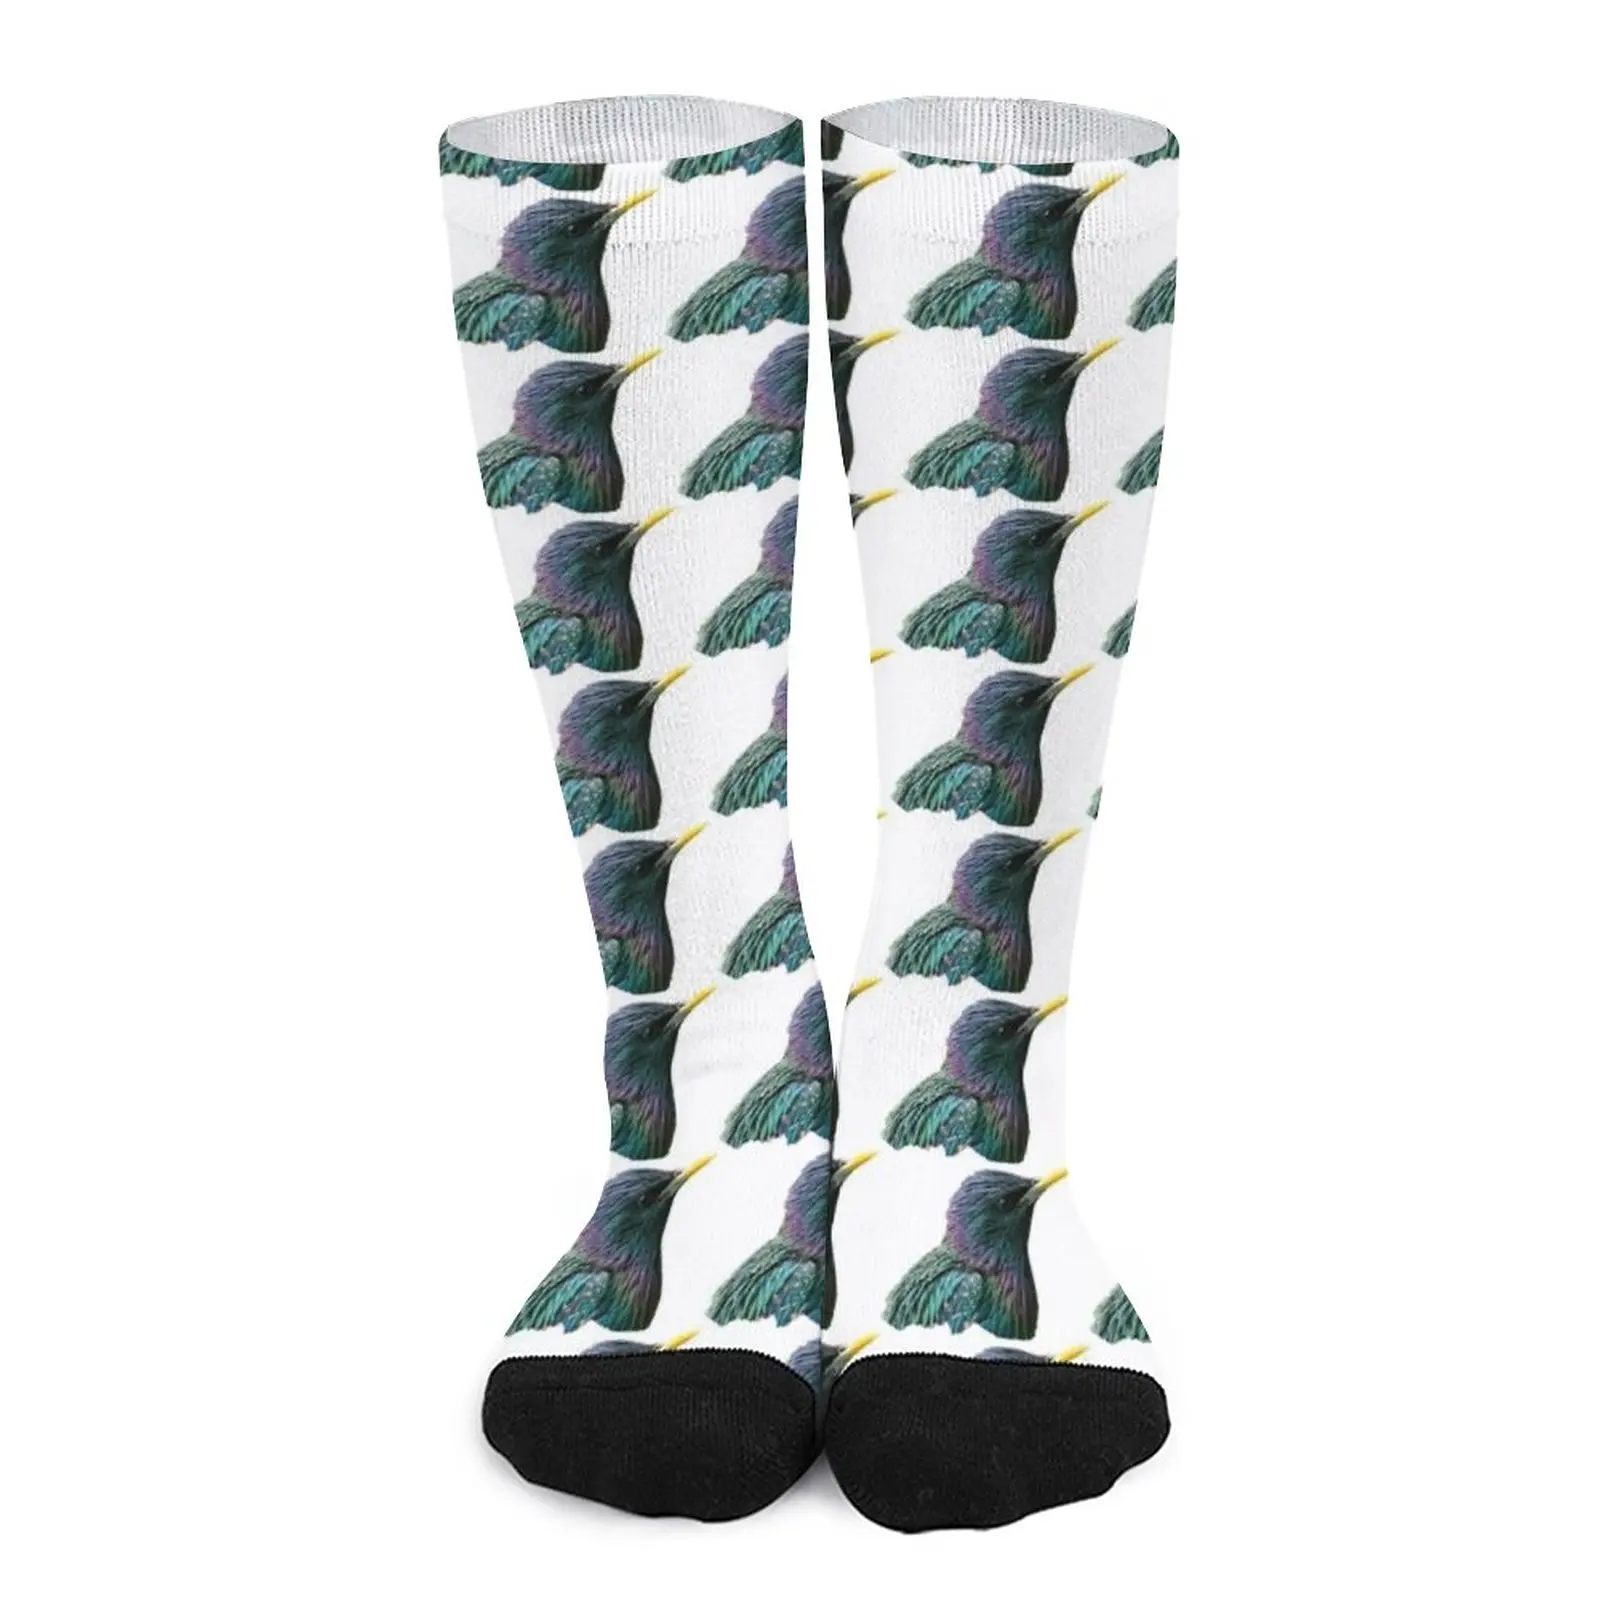 My Starling Socks Women socks ankle socks